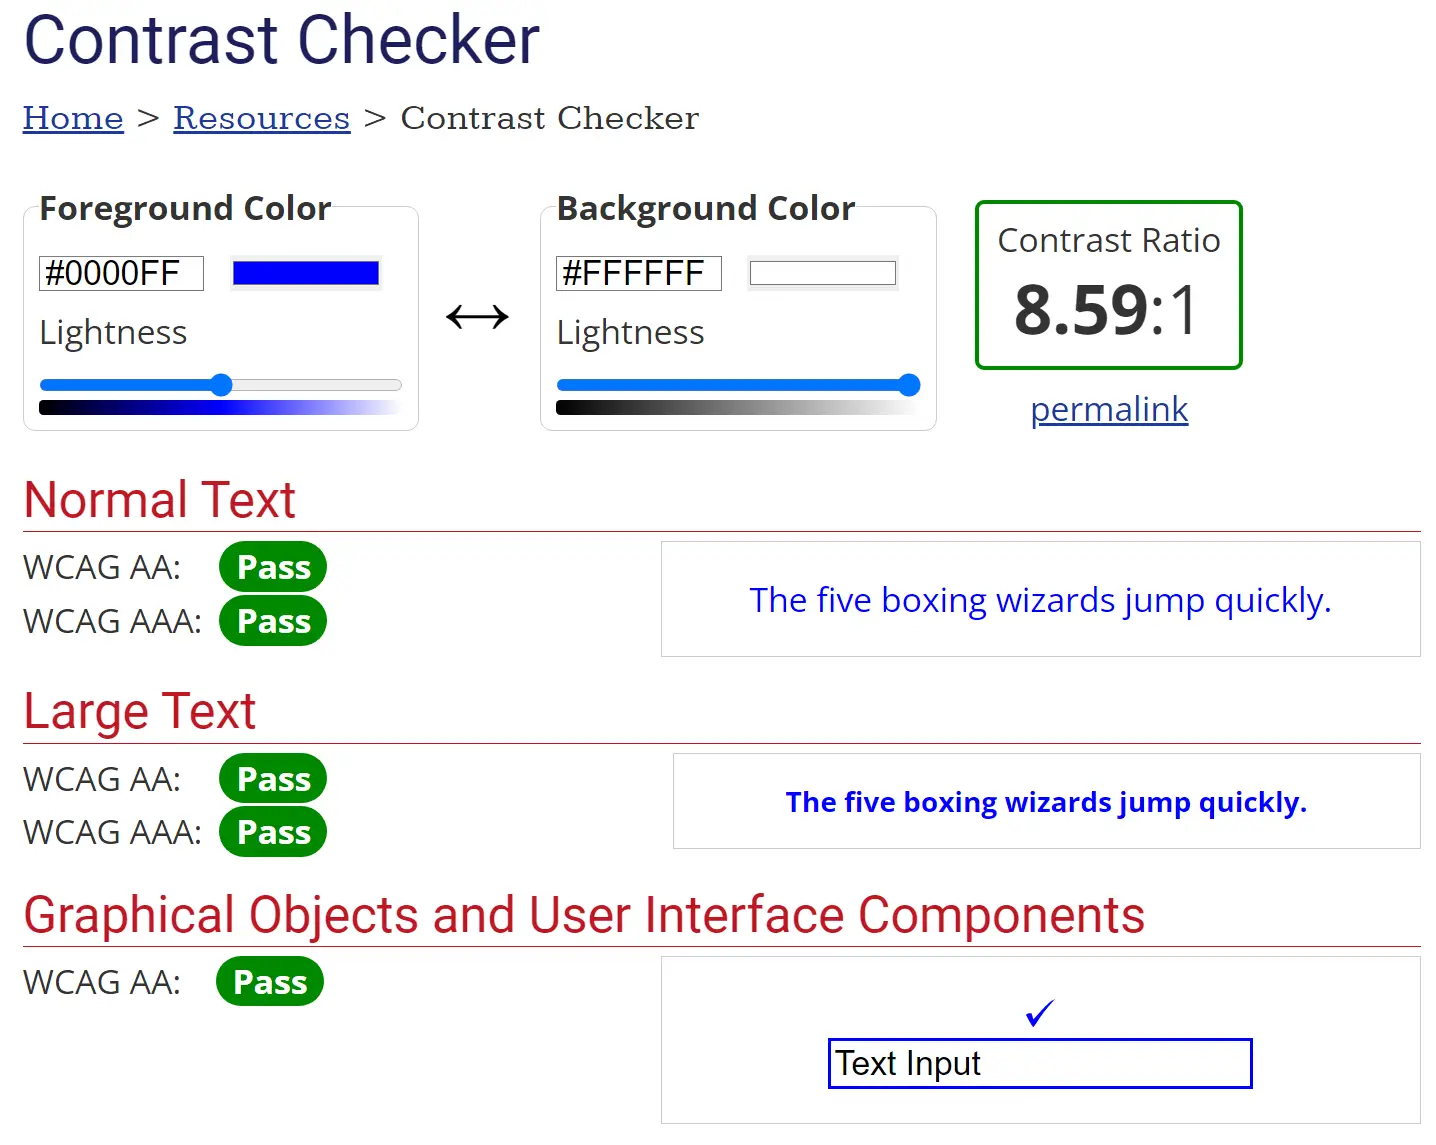 WebAIM Contrast Checker는 "배경 및 전경 색상의 명암비가 충분하지 않습니다" 오류를 확인합니다.